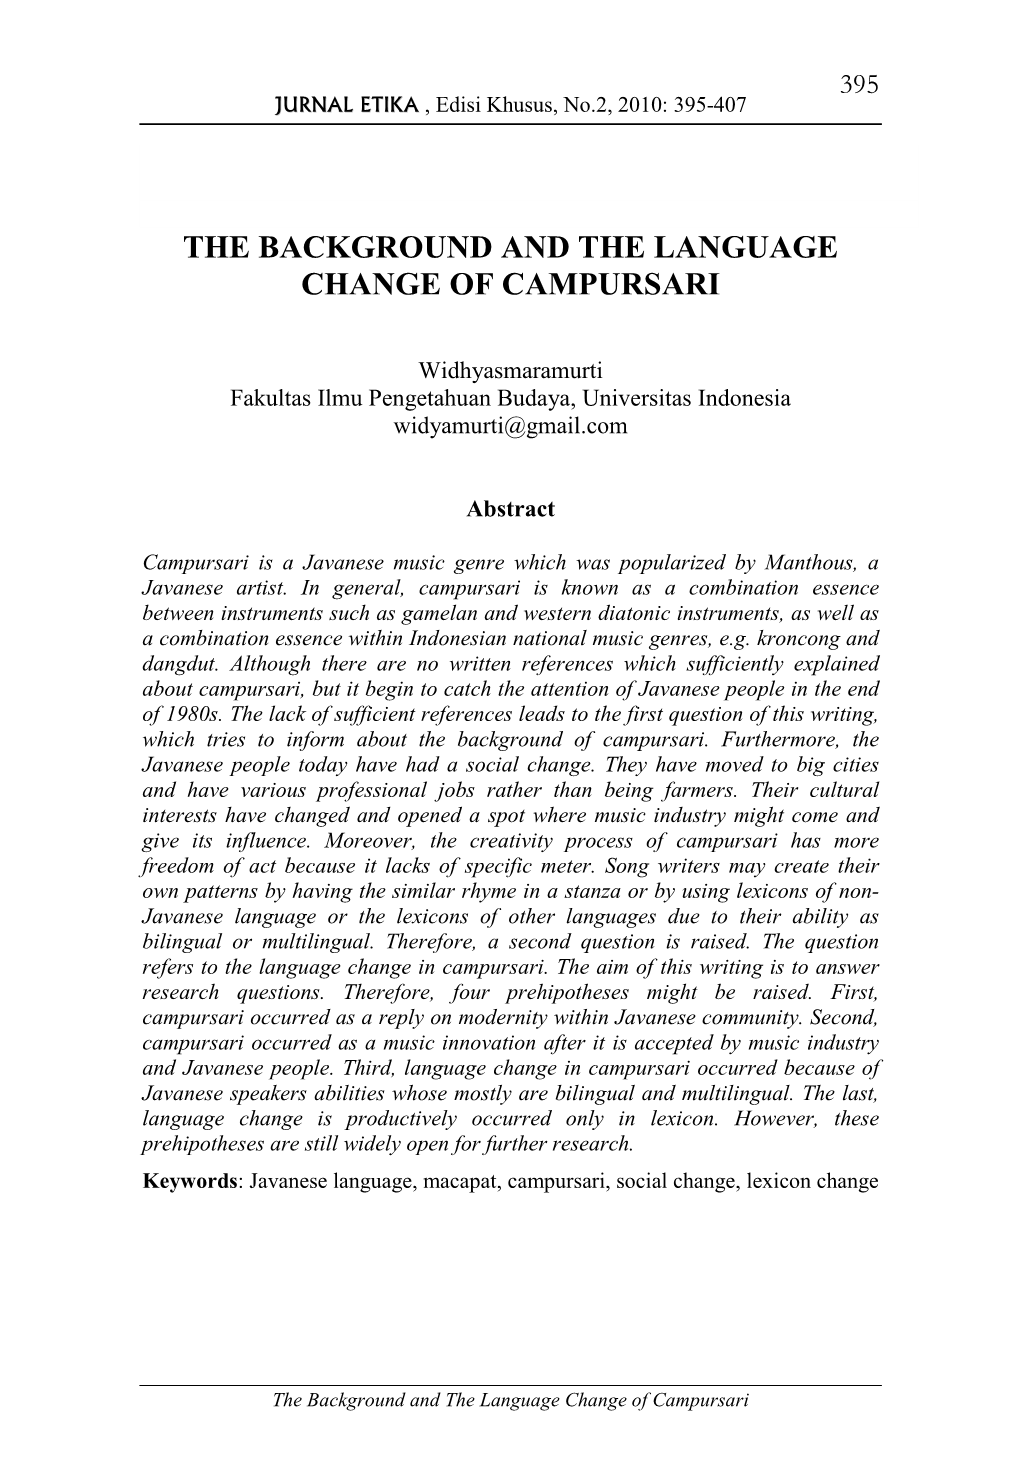 The Background and the Language Change of Campursari